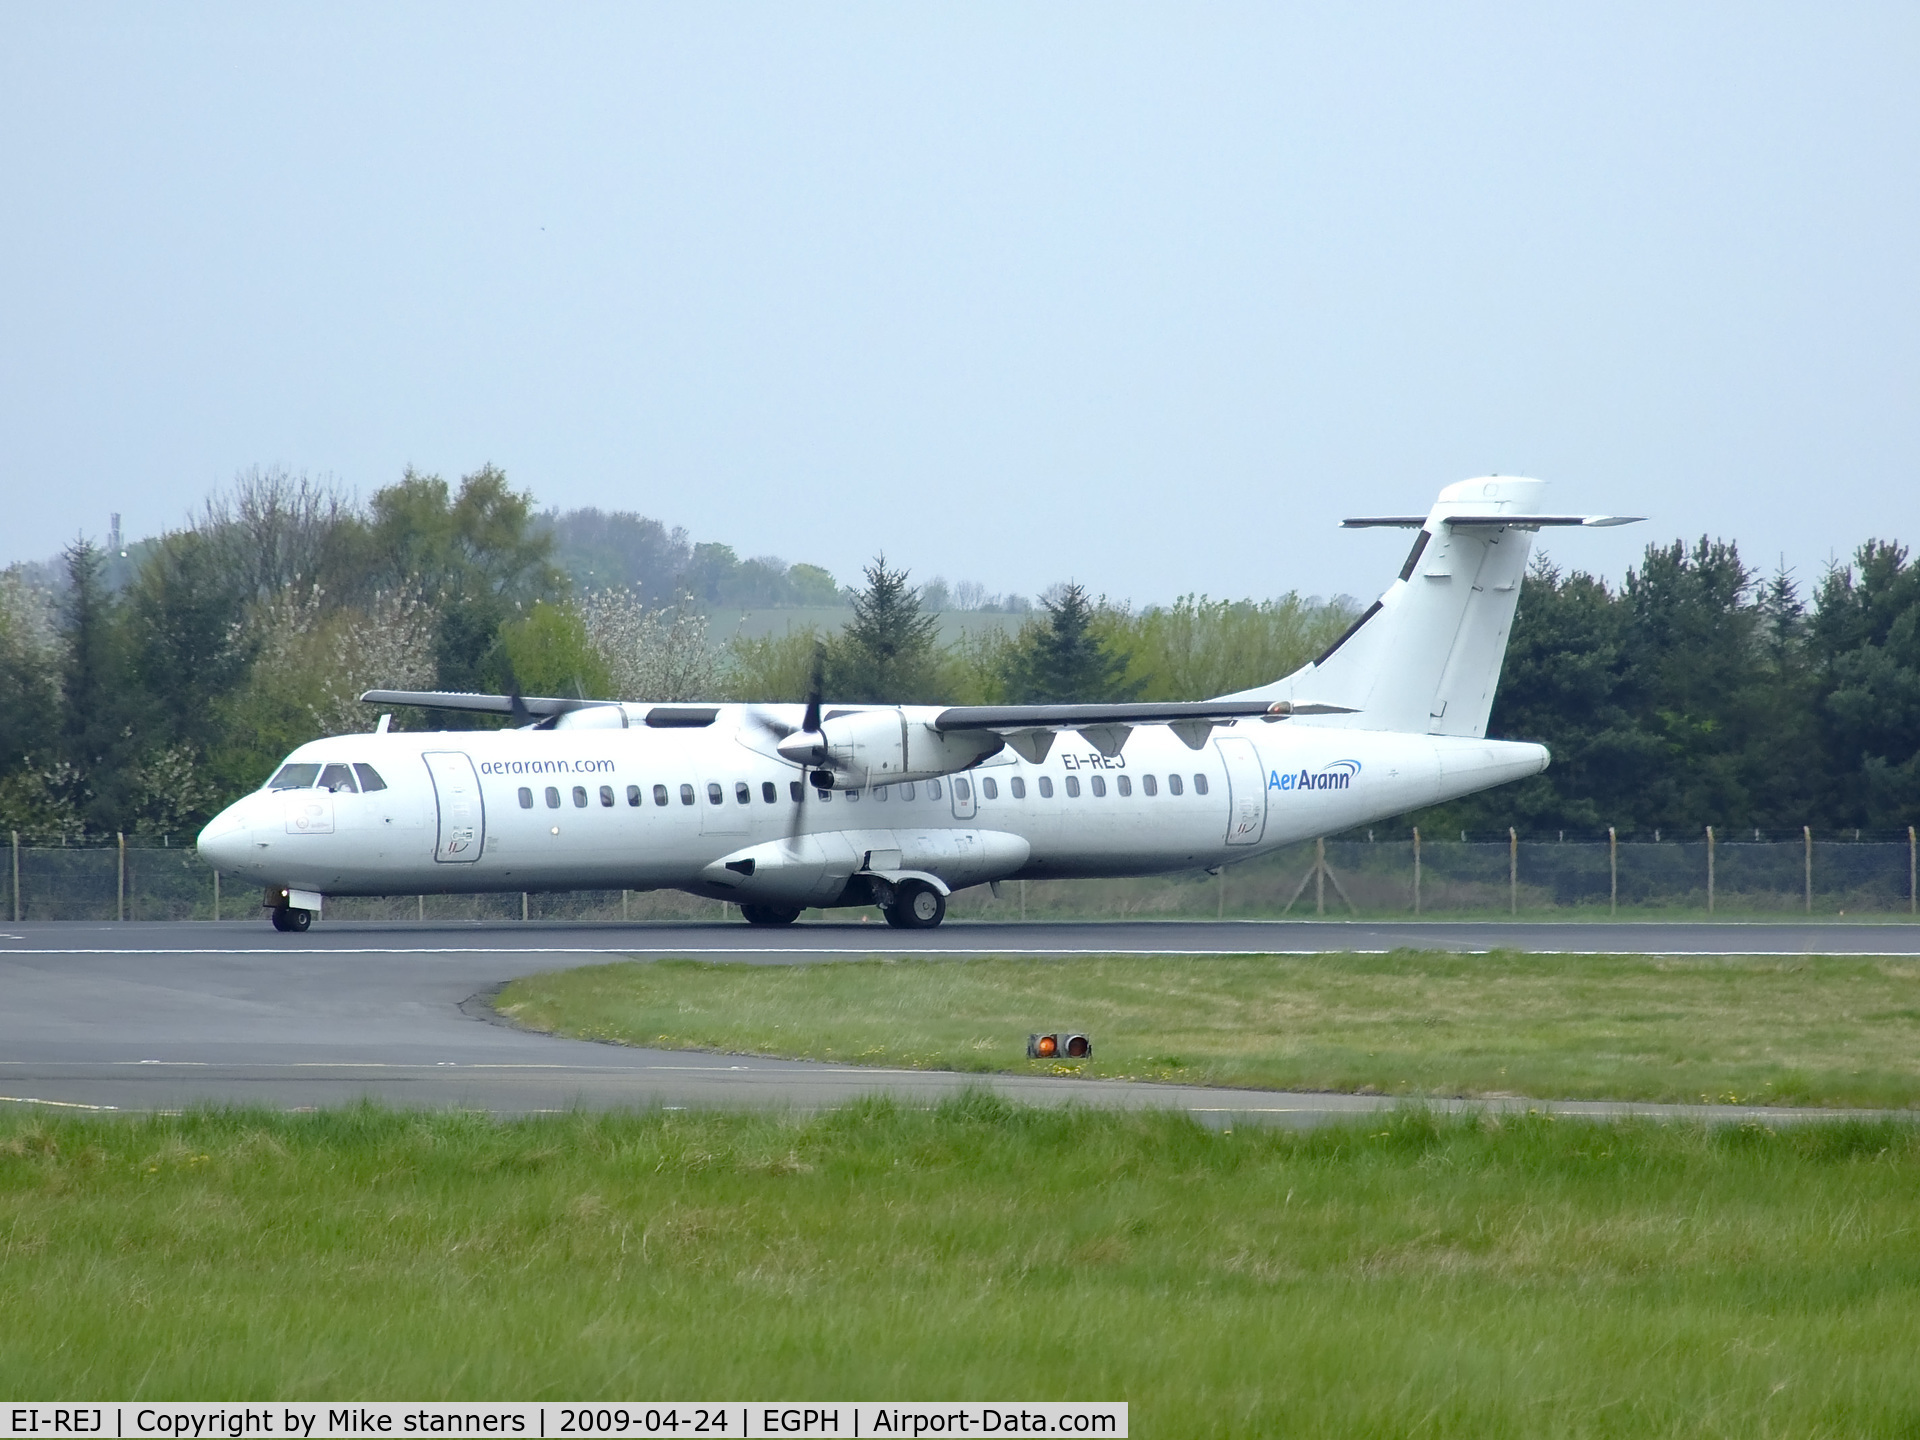 EI-REJ, 1989 ATR 72-201 C/N 126, REA463 landing on runway 24